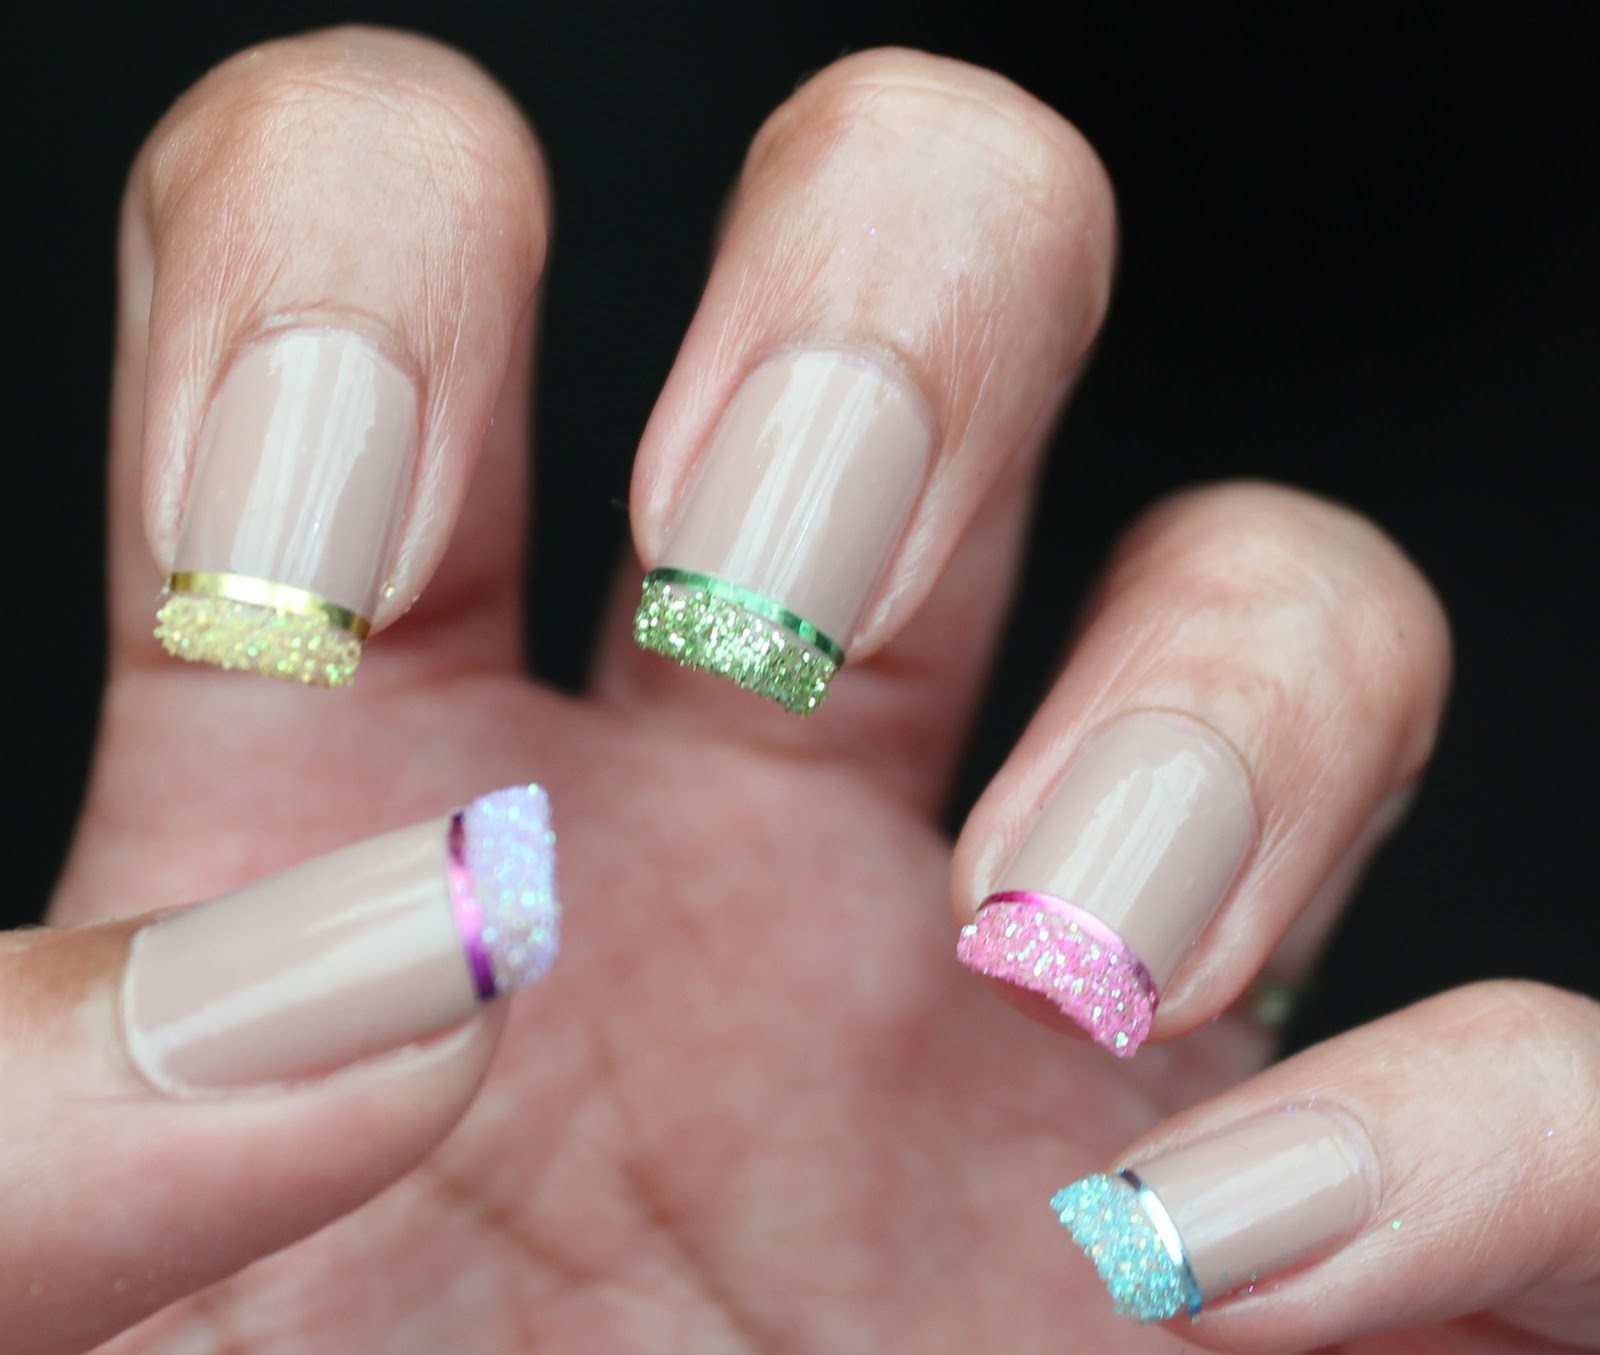 Glitter Tip Nails
 Nail Art Glamorously Done Glittered Foiled Tips